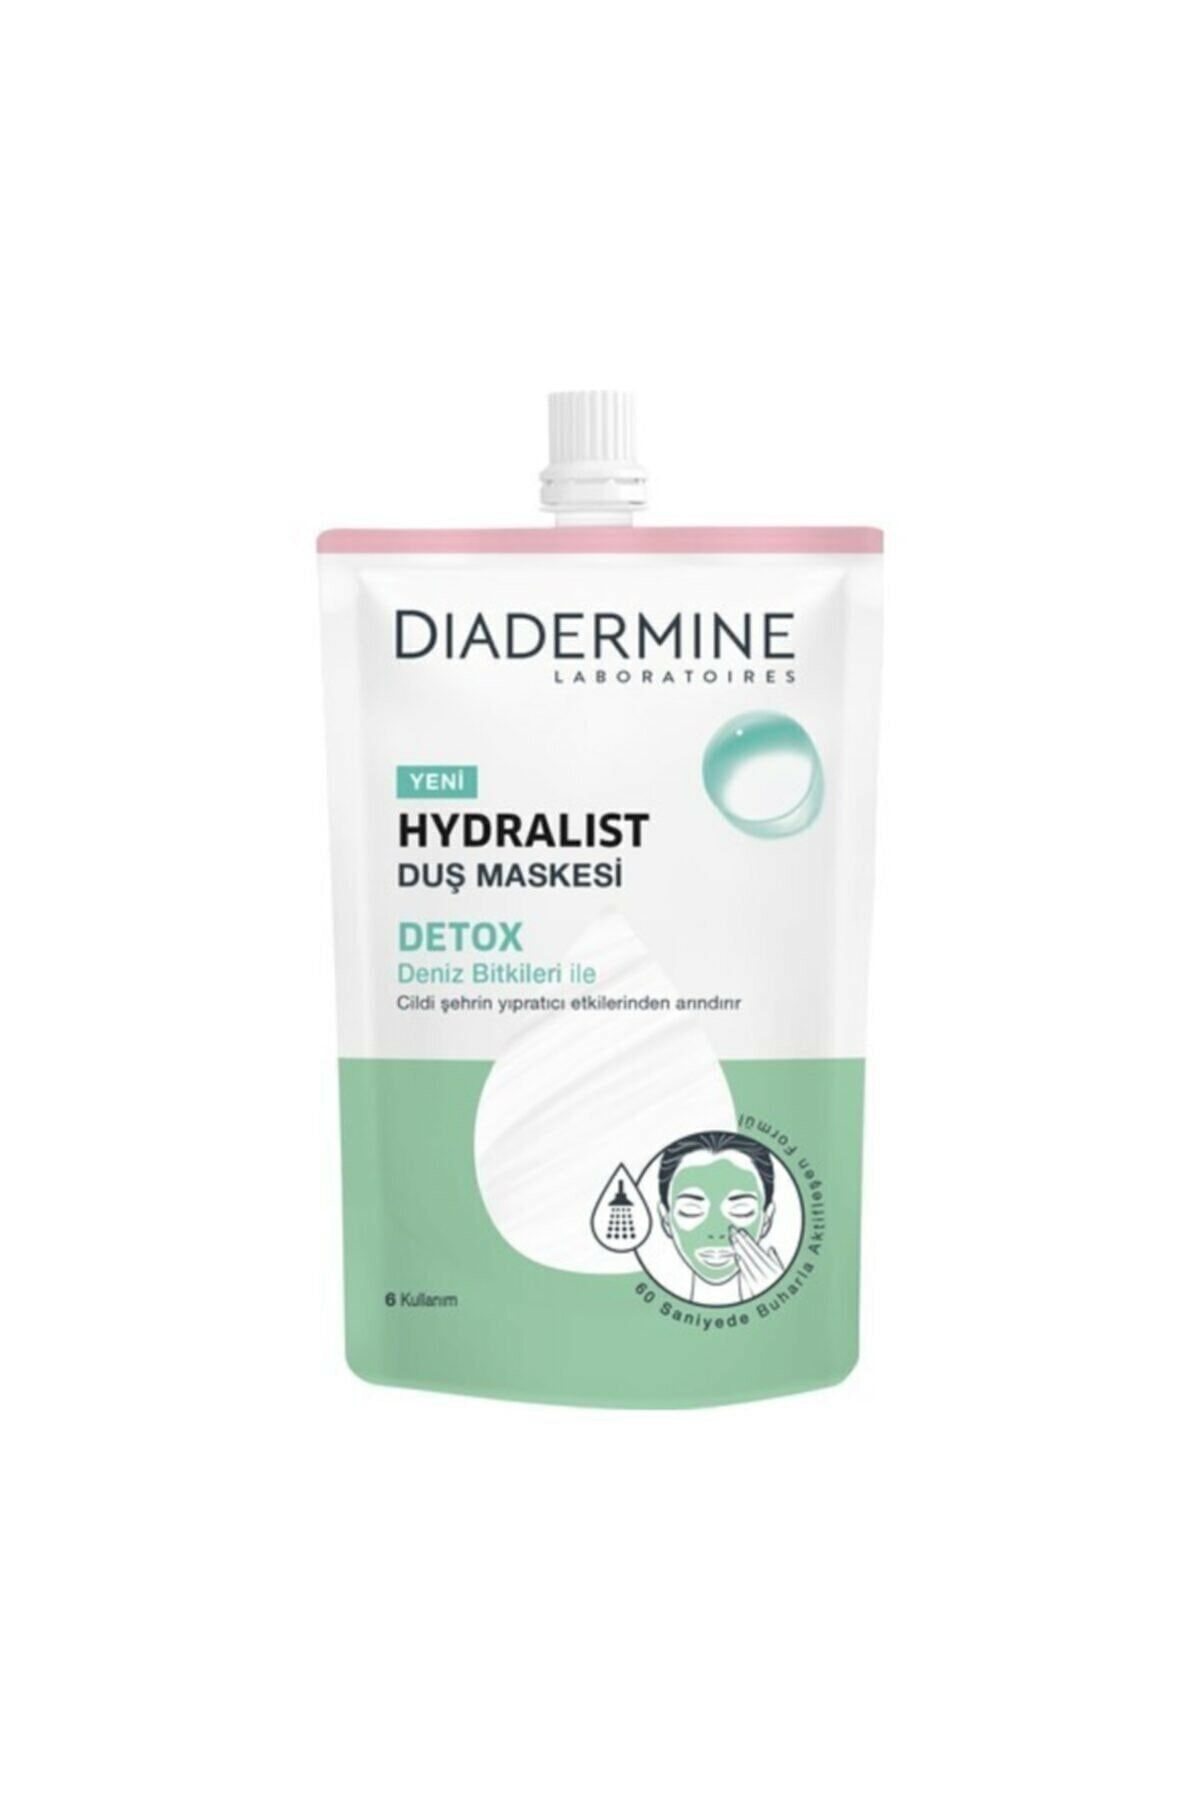 Diadermine Hydralist Duş Maskesi Detox 4015100308419